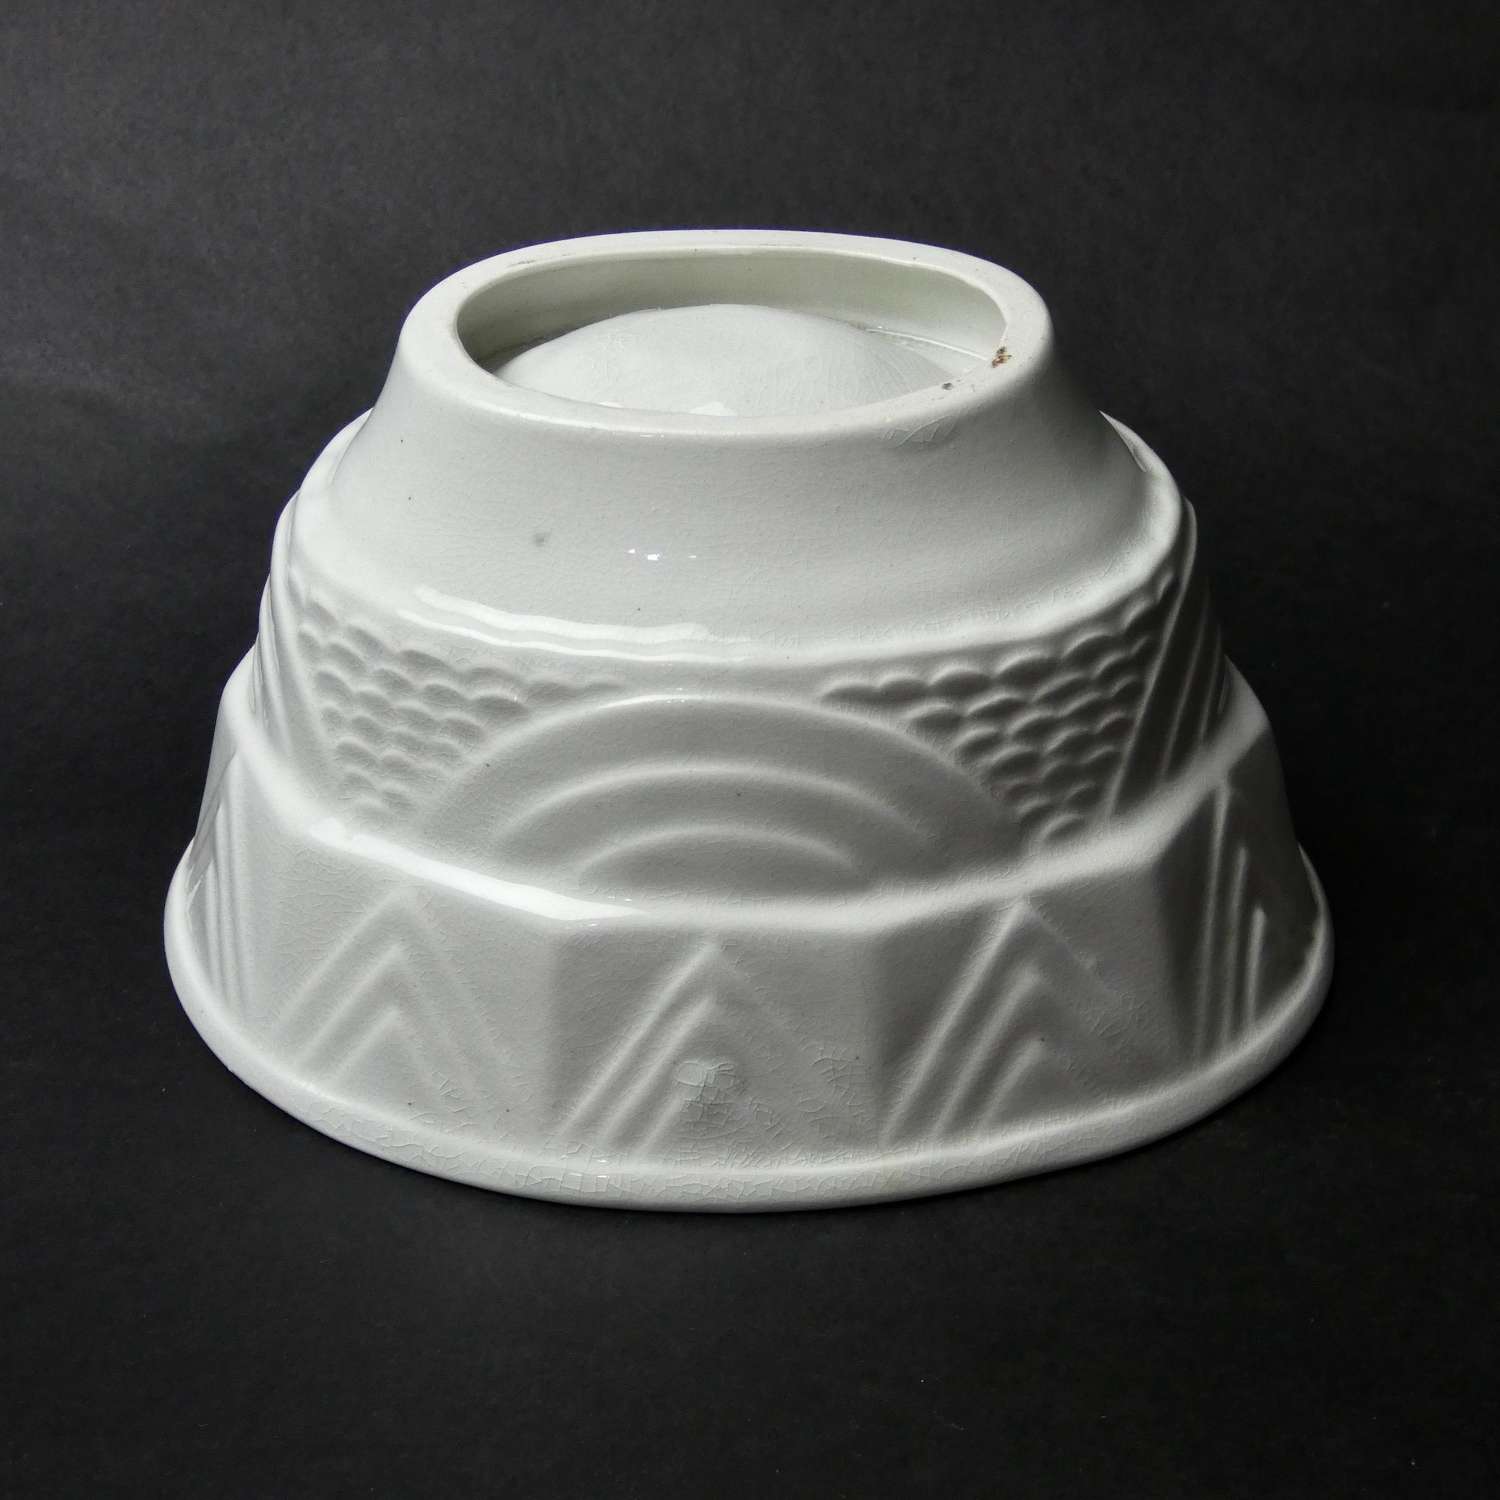 Decorative ceramic mould